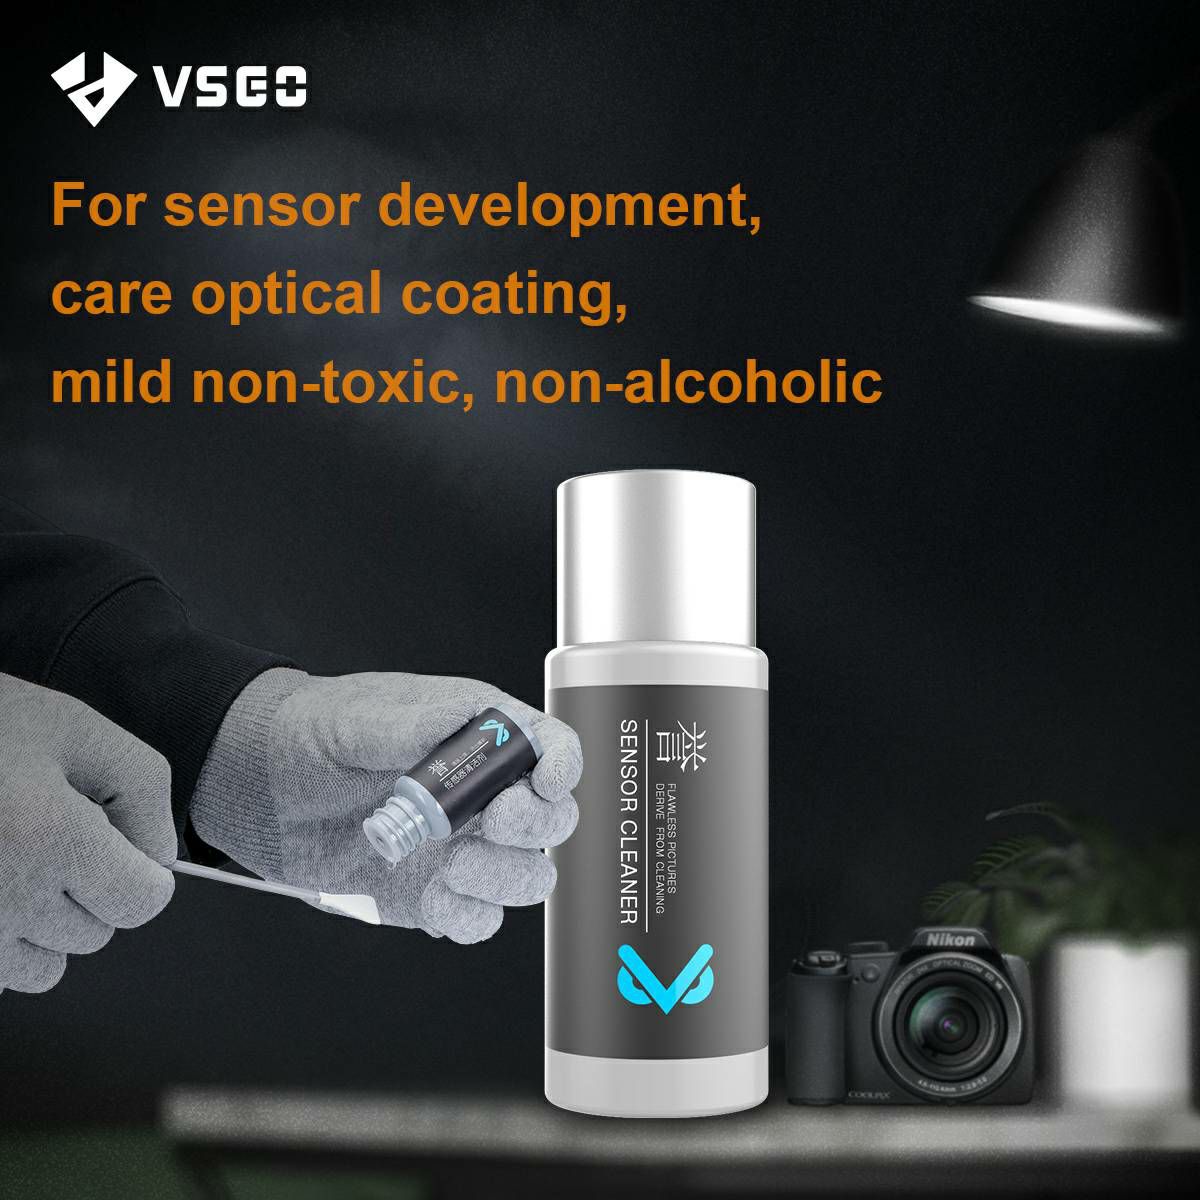 VSGO VS-S03E Sensor Cleaning Swab Rod Kit 12x špahtlica i 1x10ml tekućina za čišćenje Full Frame senzora